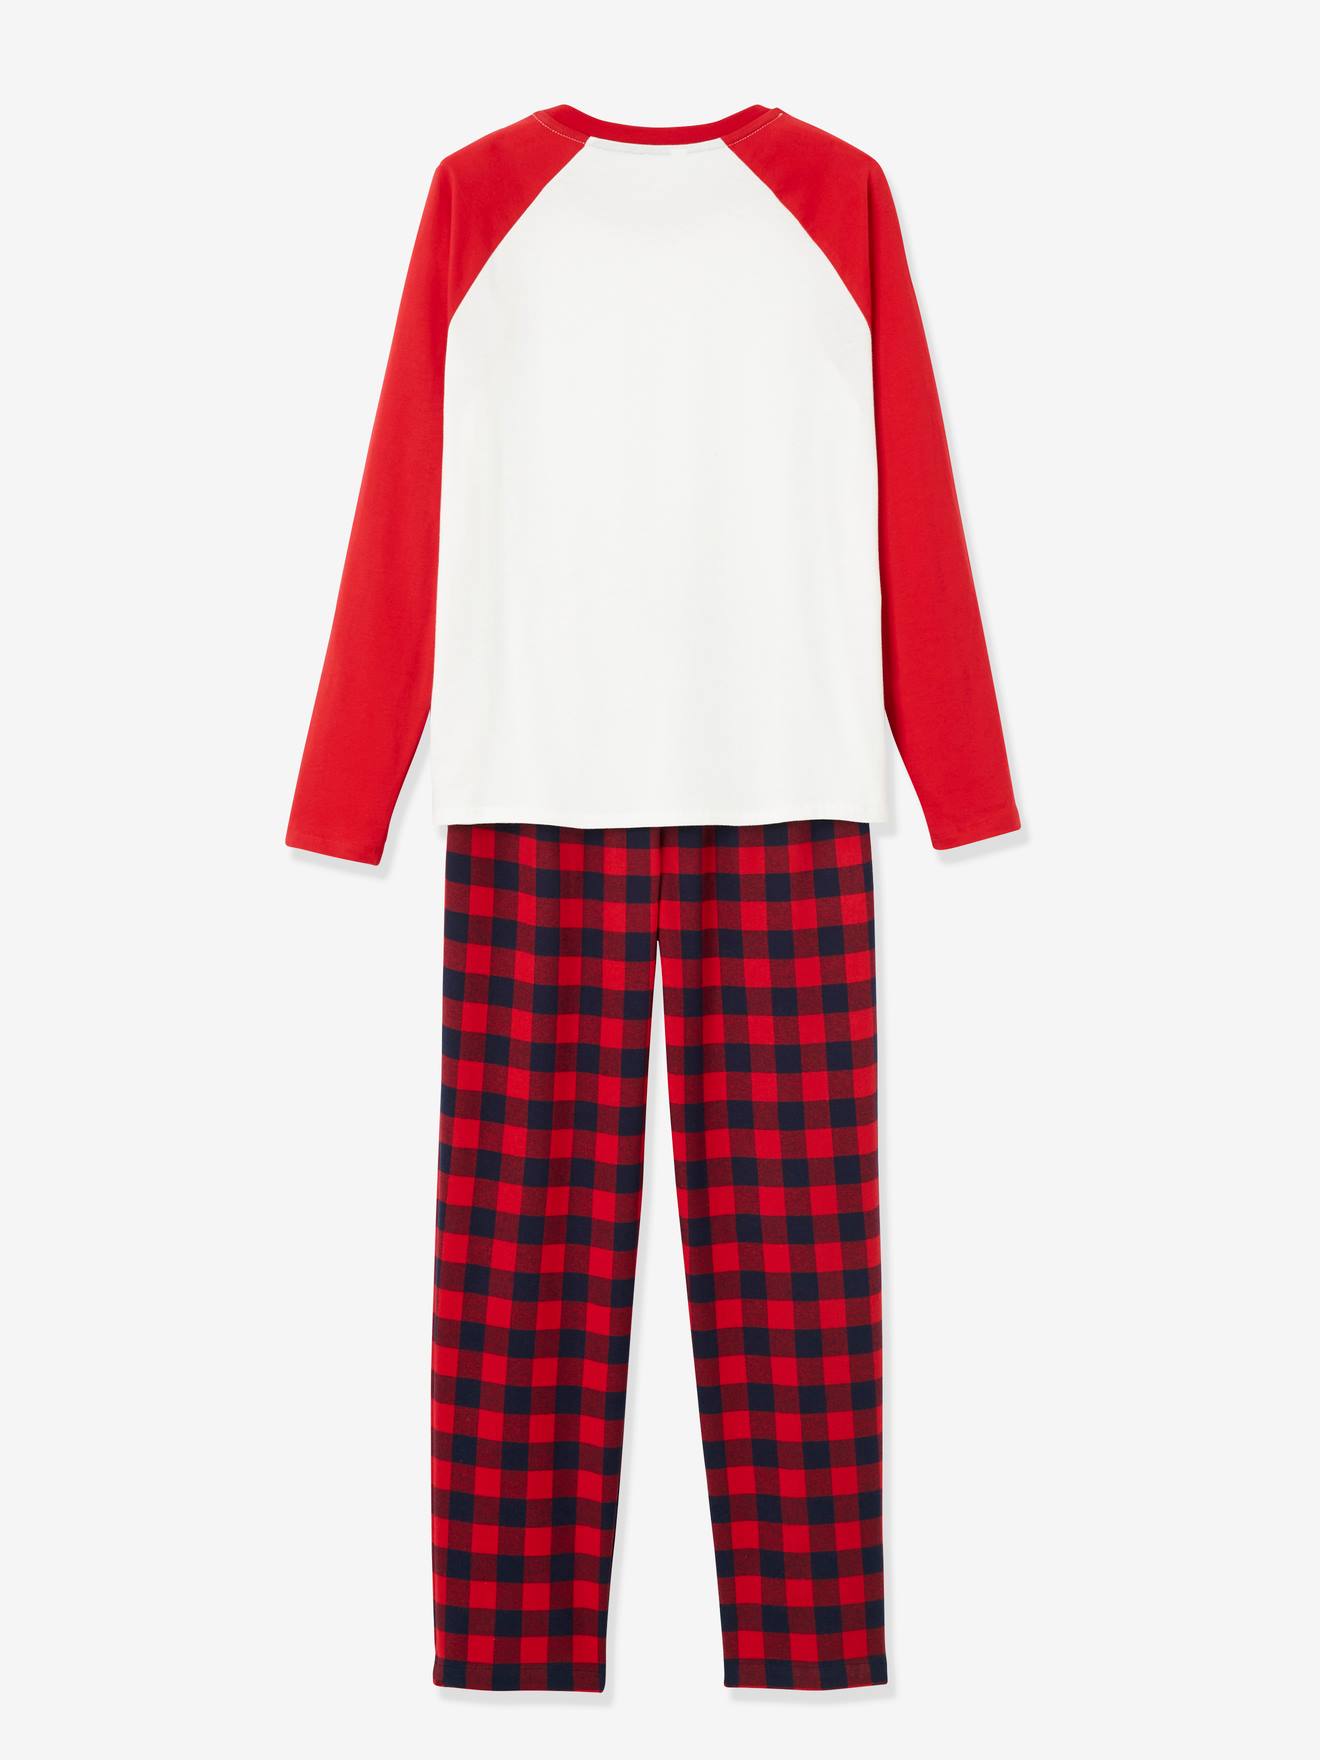 Pijama mujer Navidad cápsula Familia beige claro con motivos - Vertbaudet